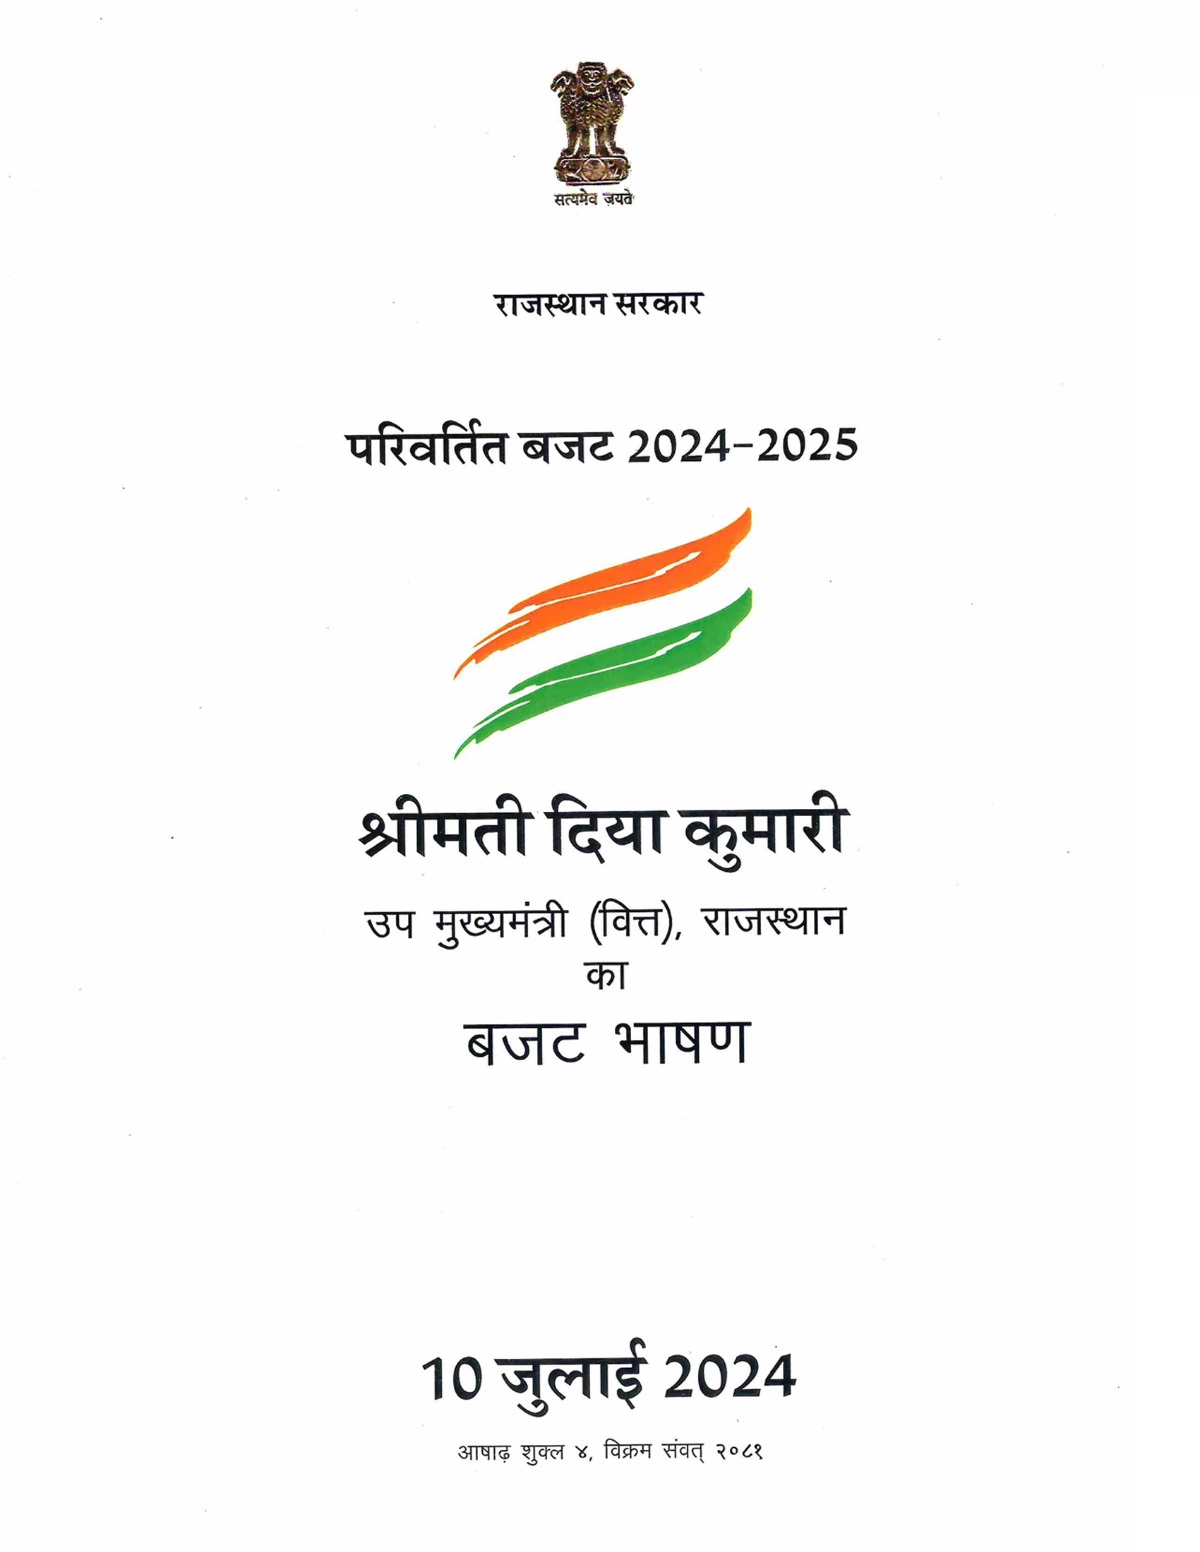 Rajasthan Budget Speech Hindi 2024